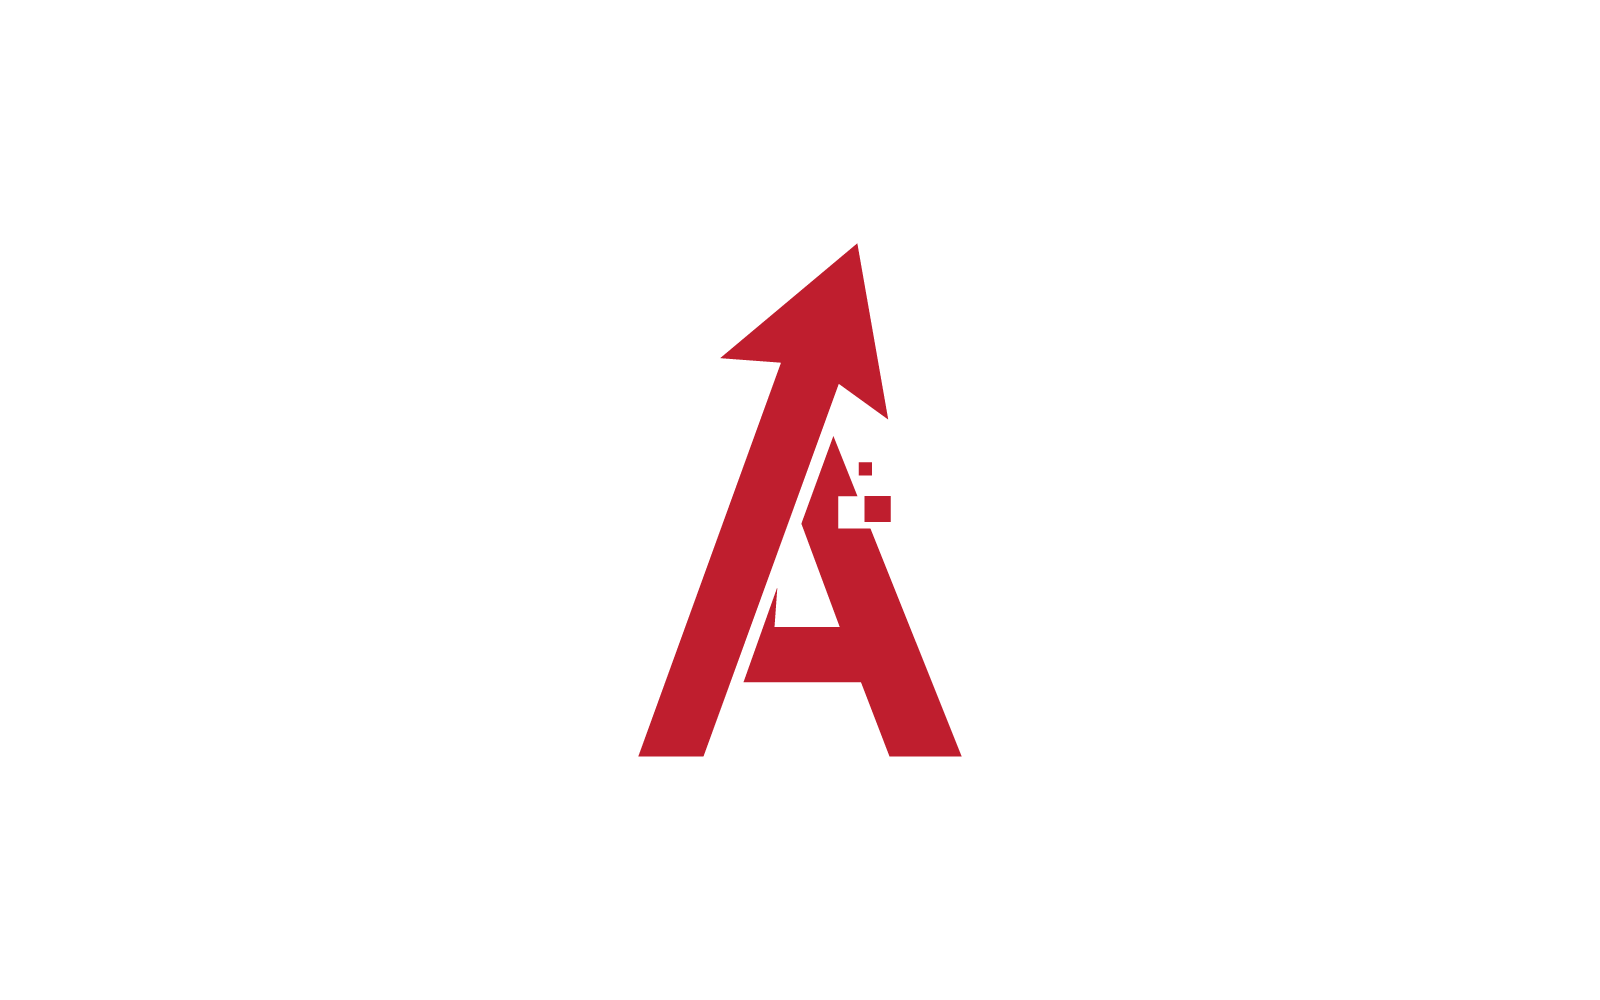 Arrow initial letter technology logo illustration